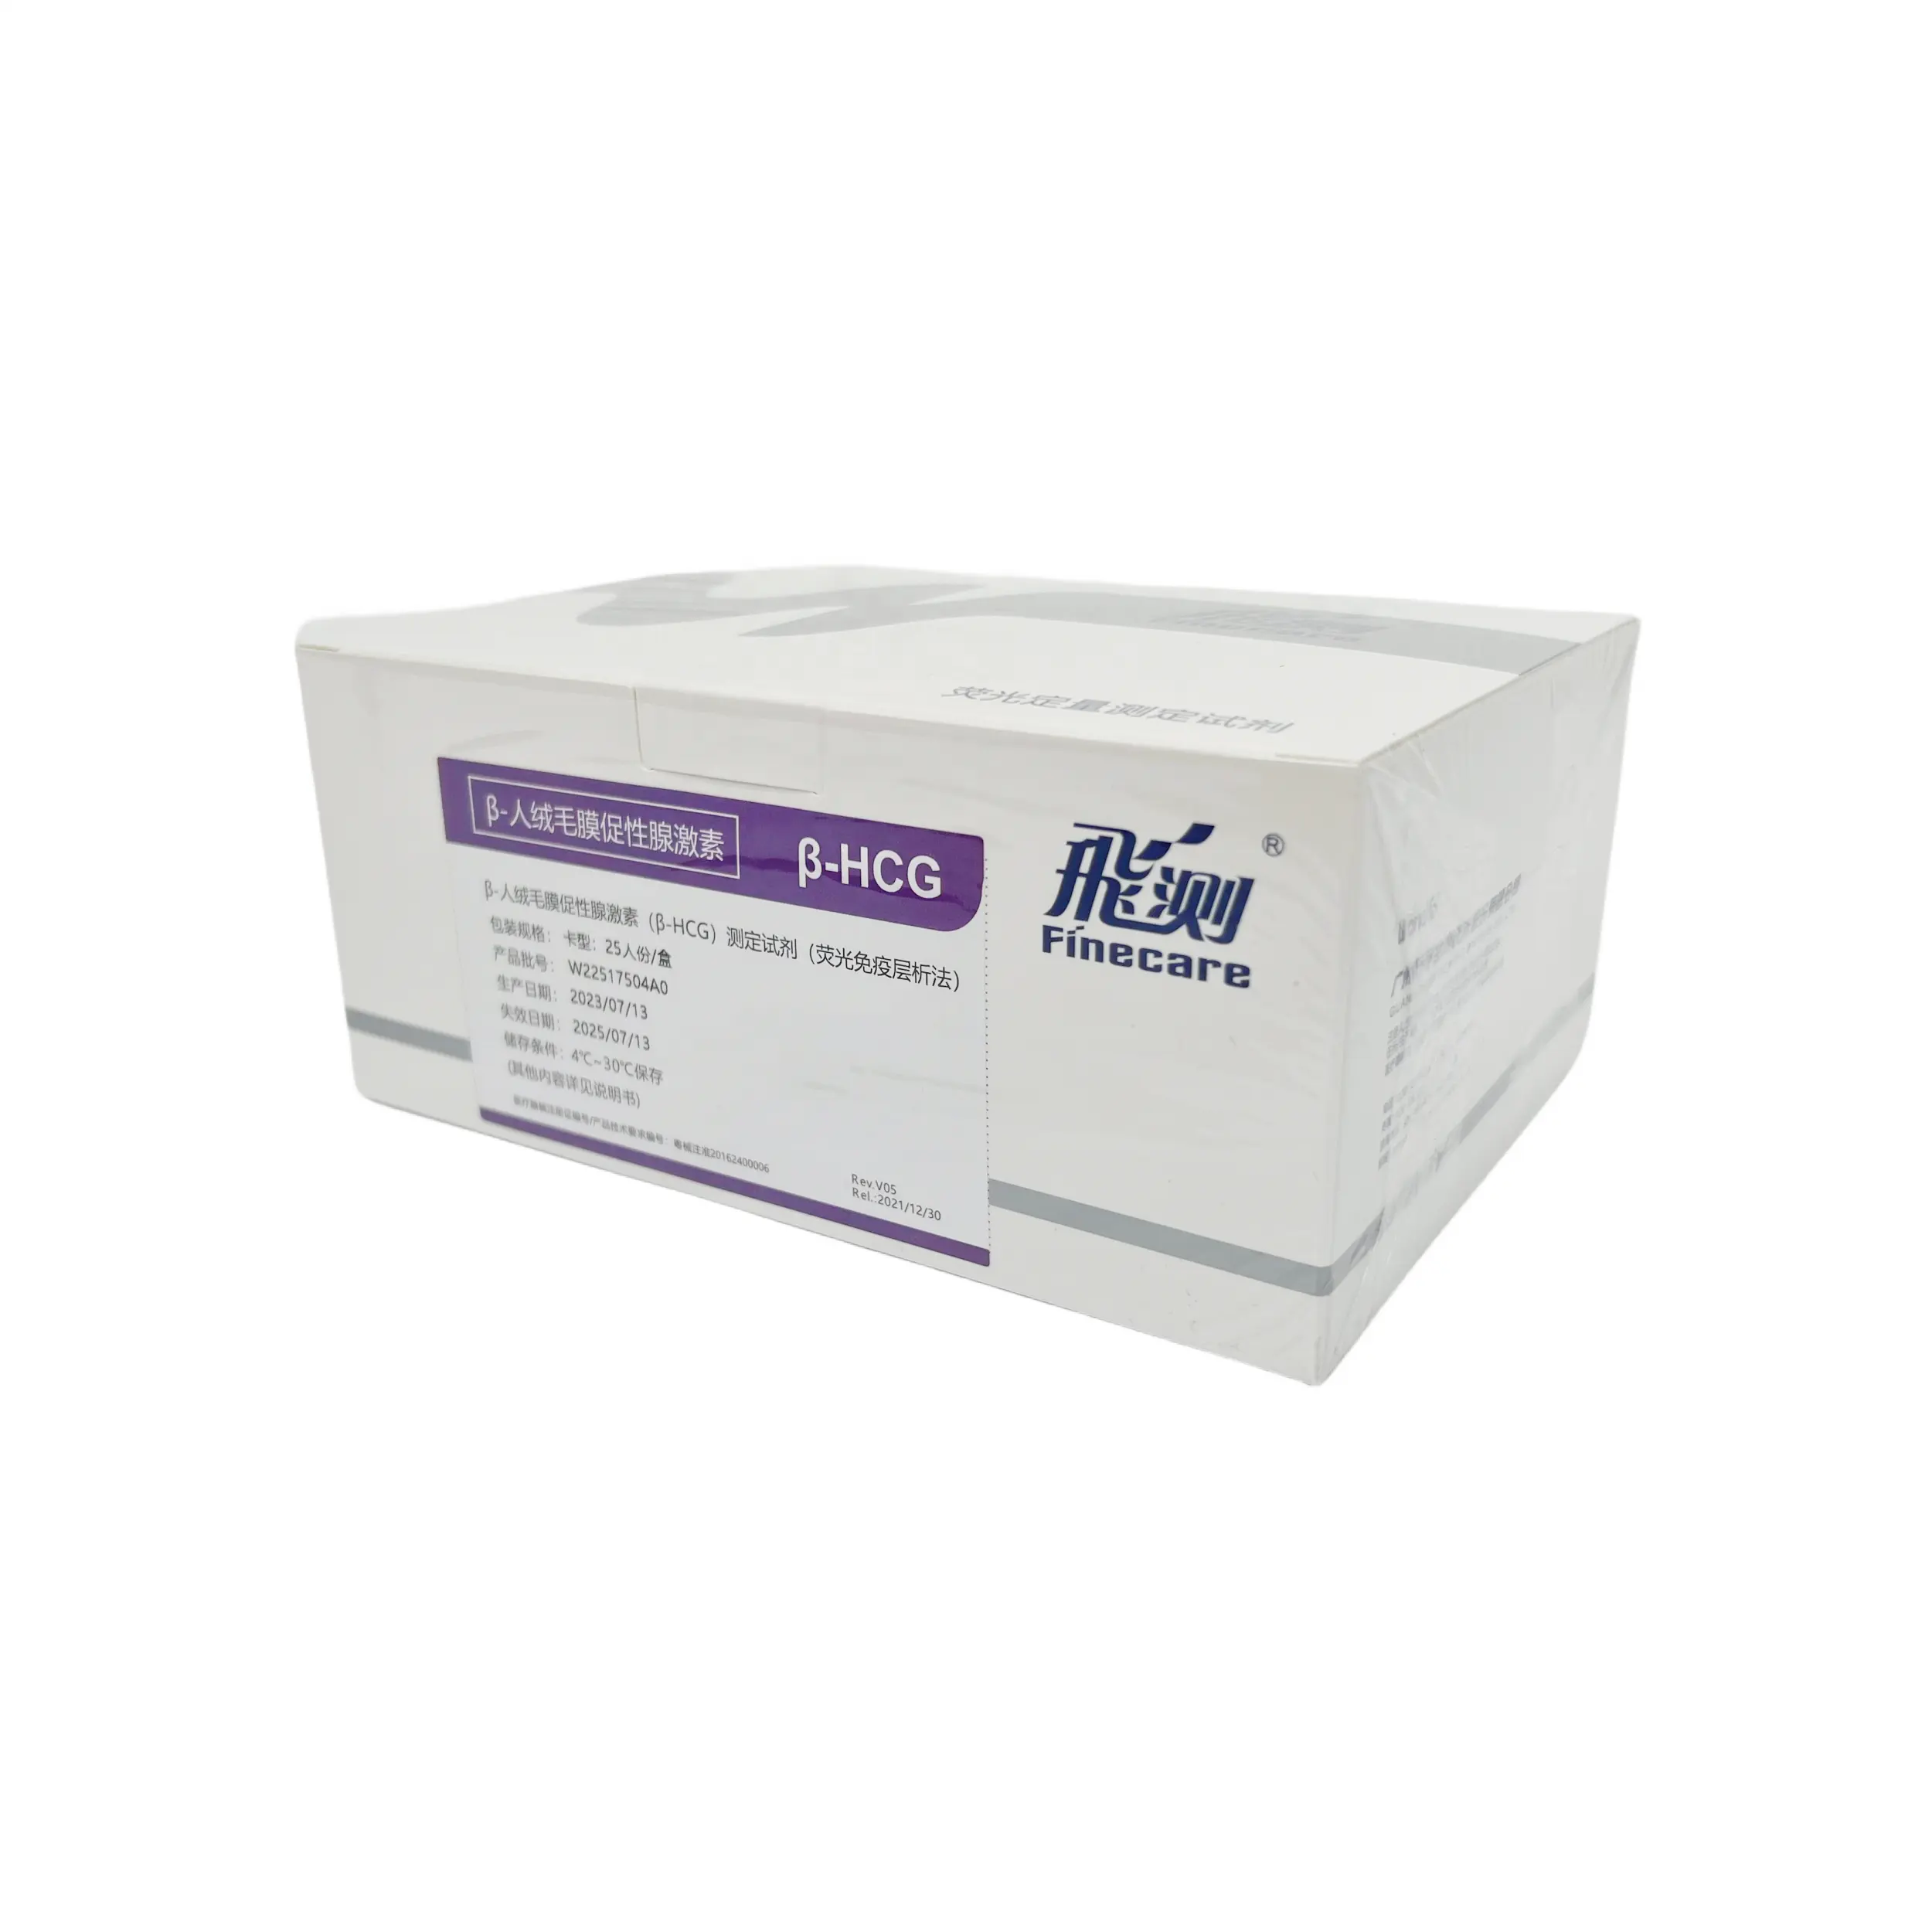 Kit di Finecare B-HCG Test quantitativo rapido Wondfo fertilità Beta HCG Test Kit per FS113 FS114 FS205 FS112